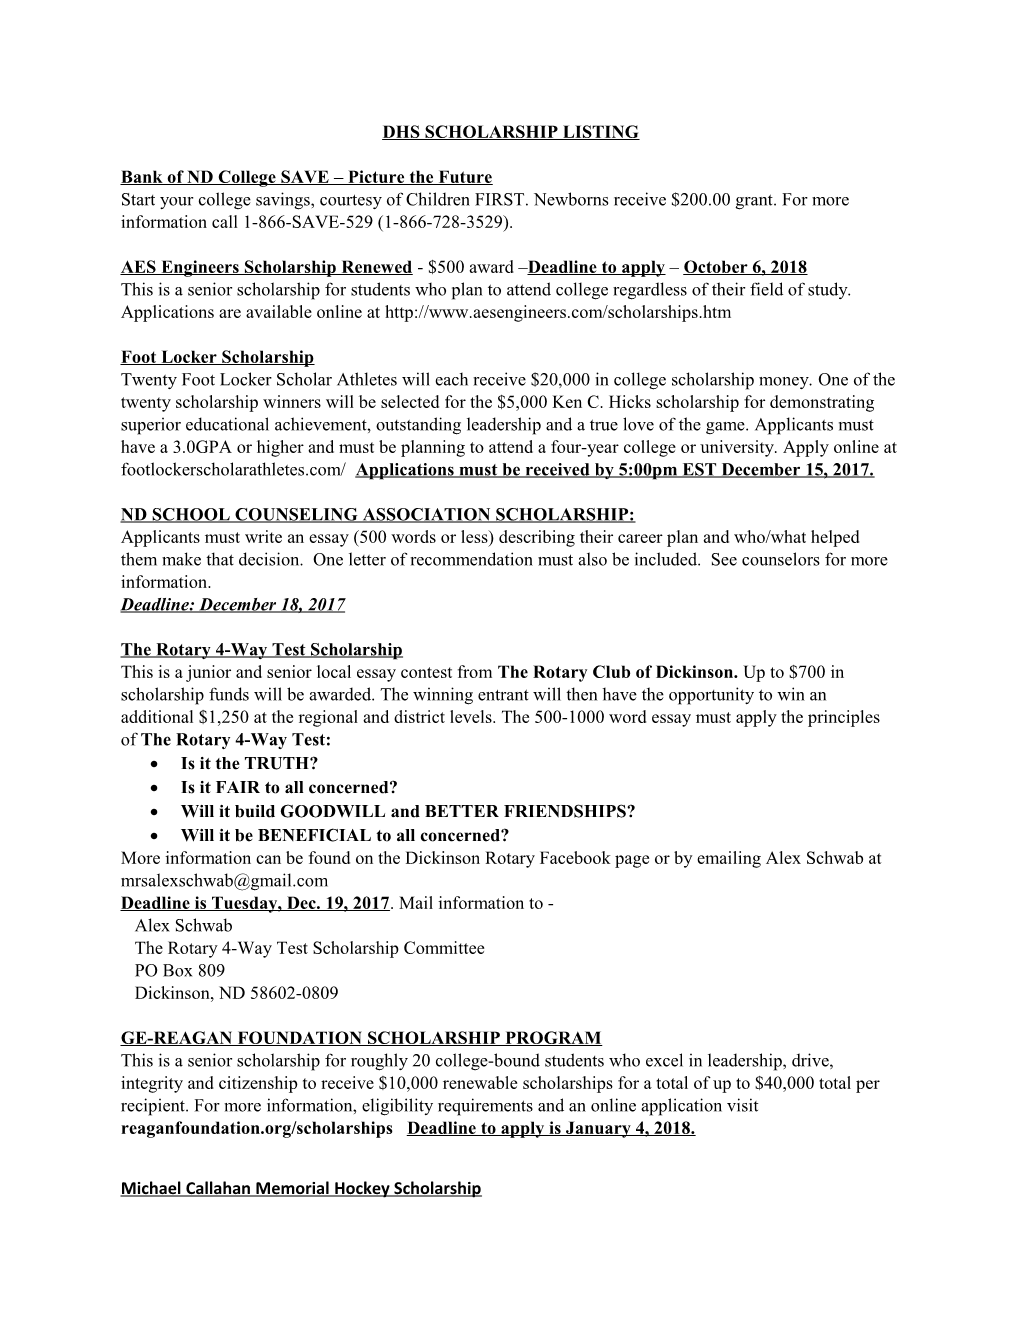 DHS Scholarship List